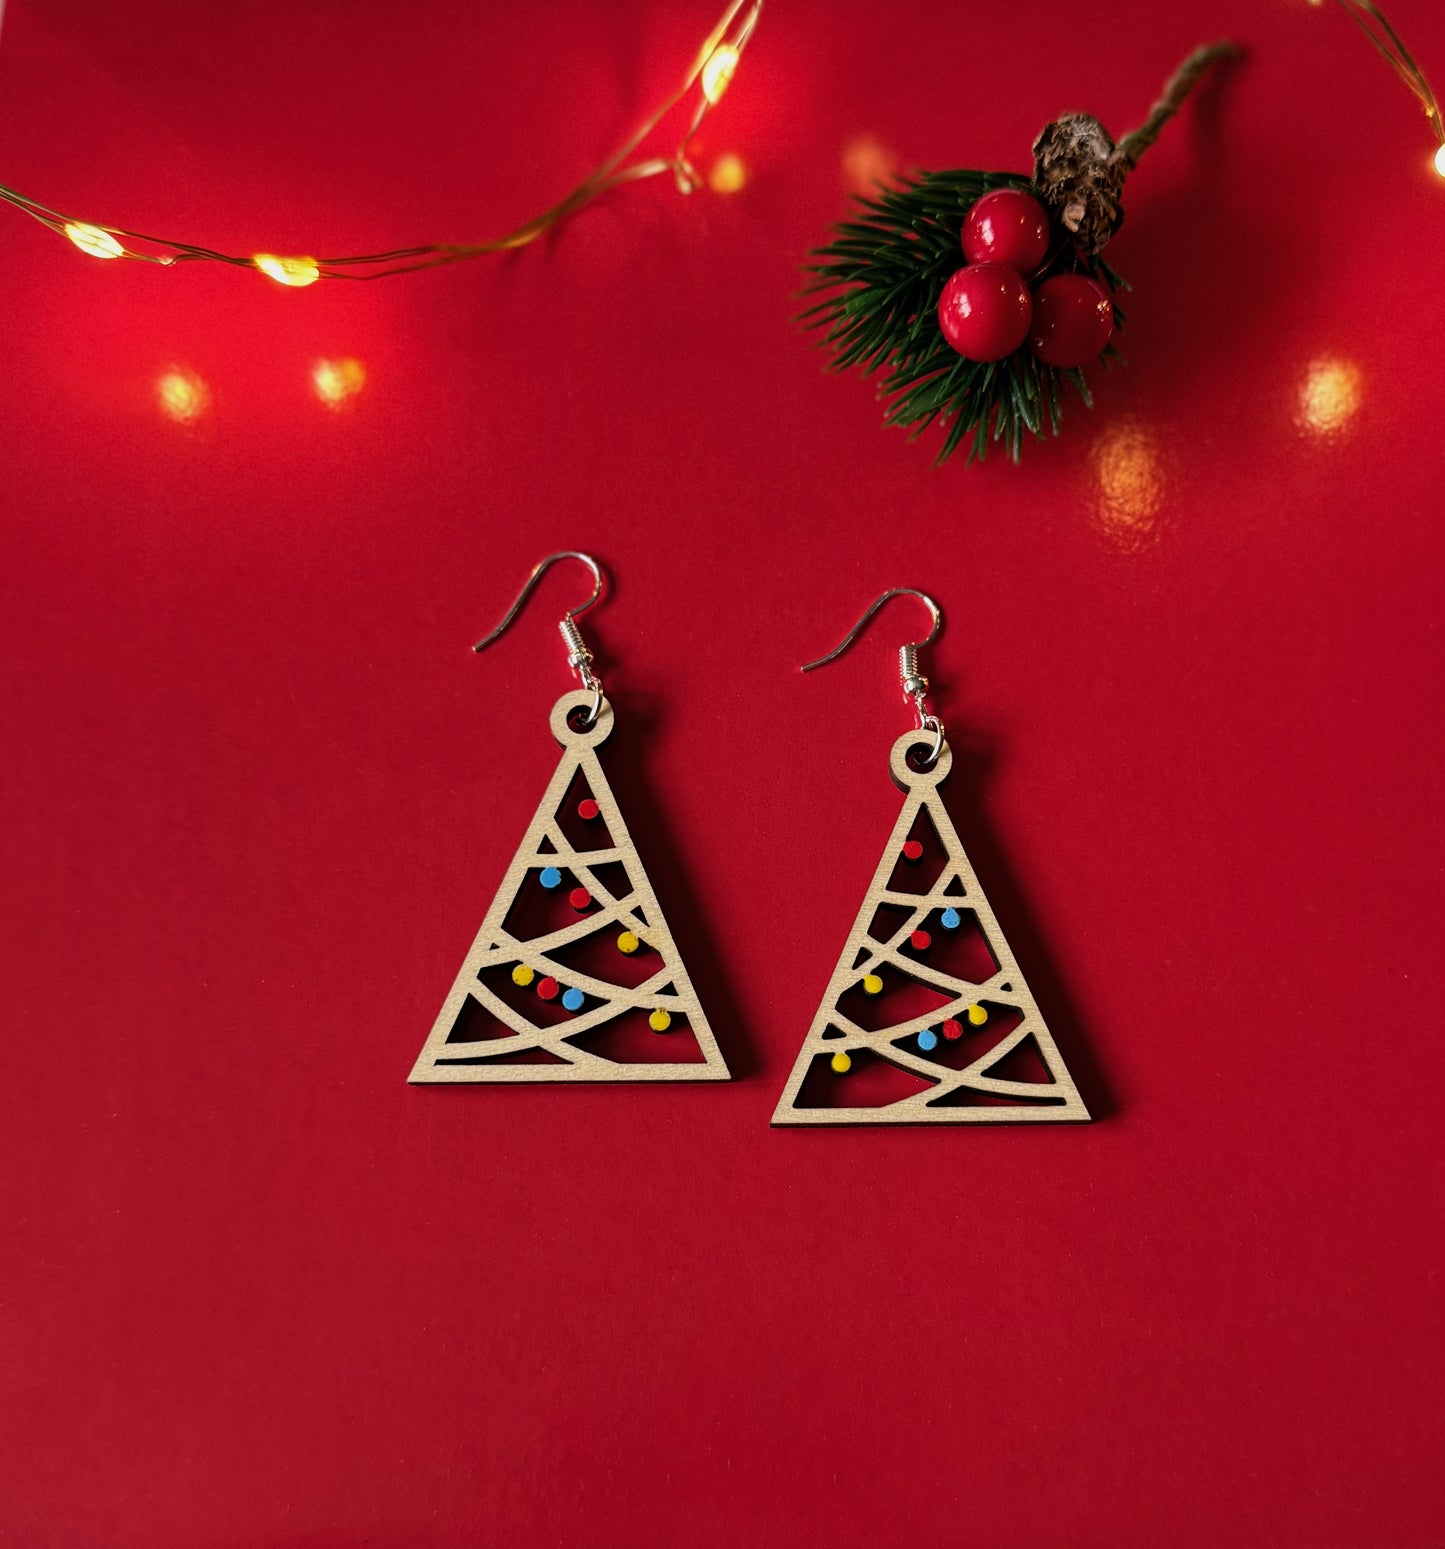 Laser cut file minimalist Christmas tree earrings, Instant download, Glowforge ready